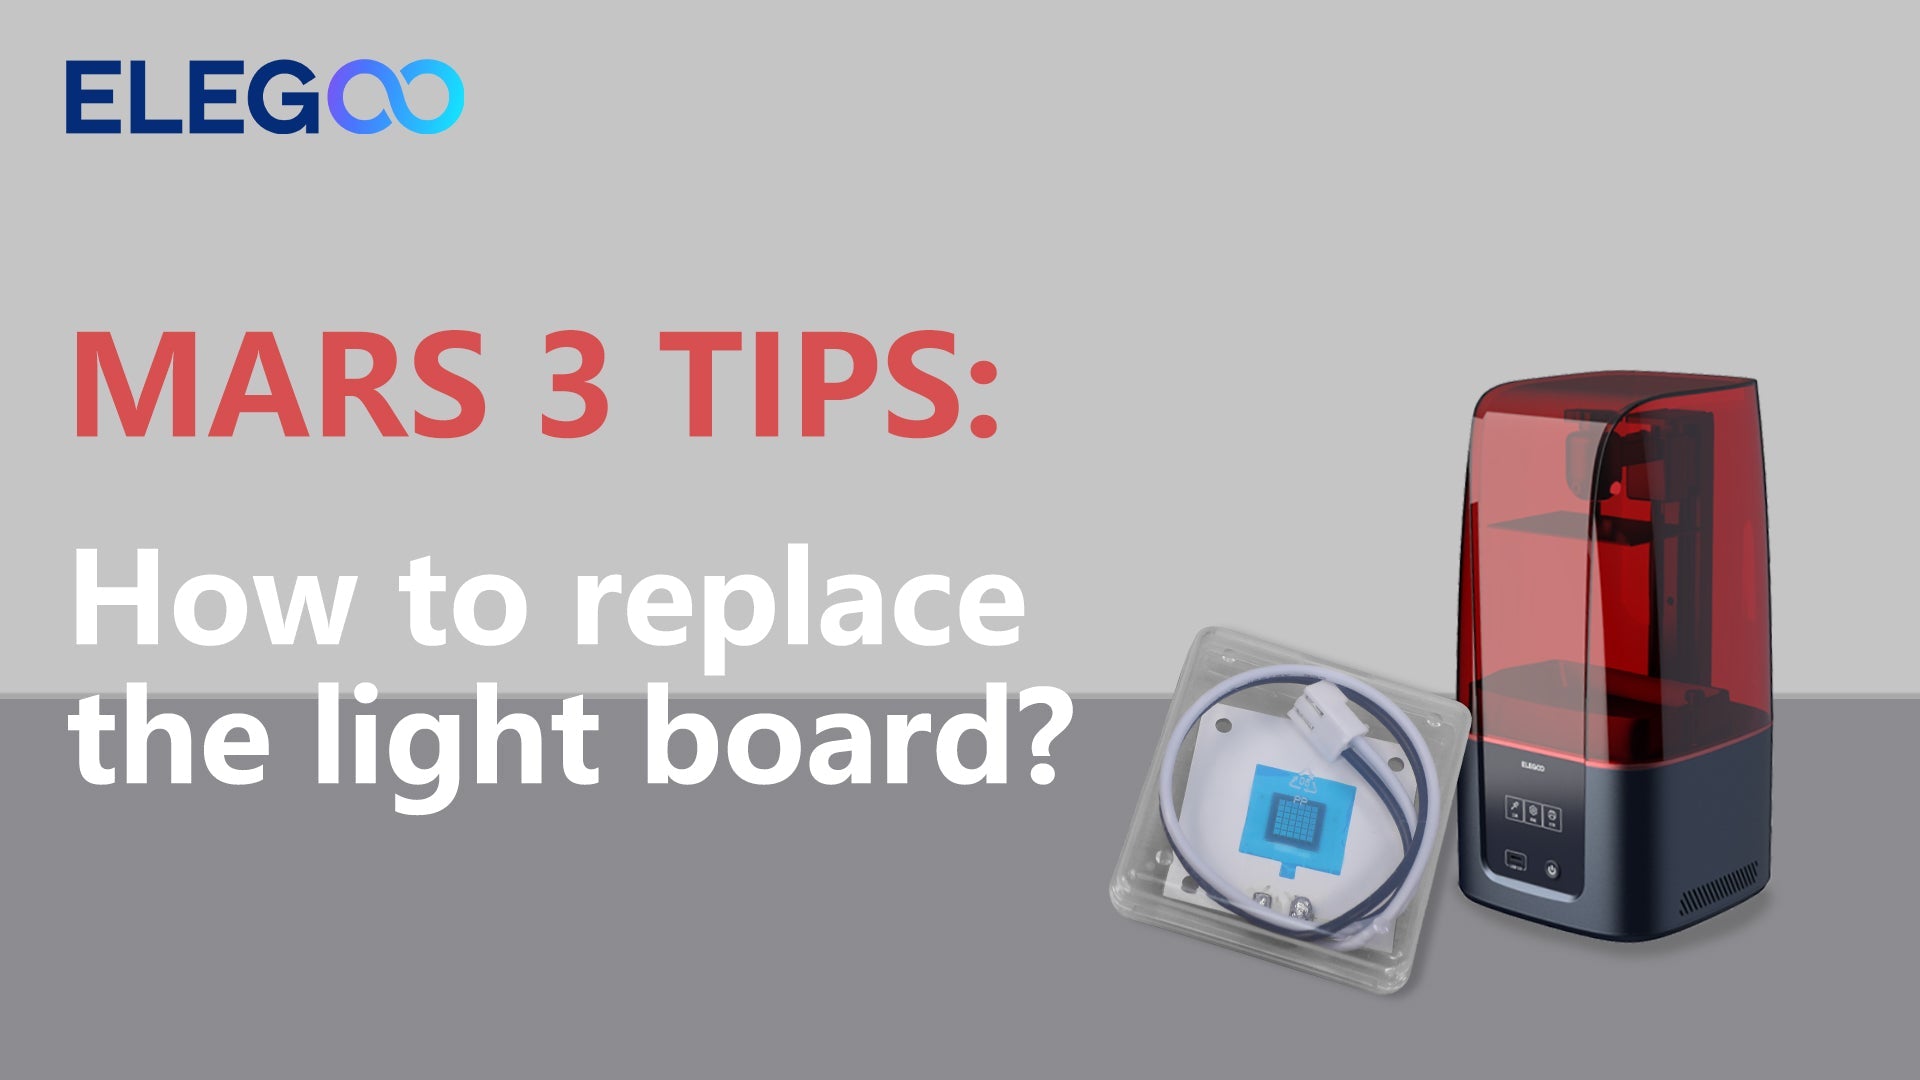 ELEGOO Mars 3: How to replace the light board?